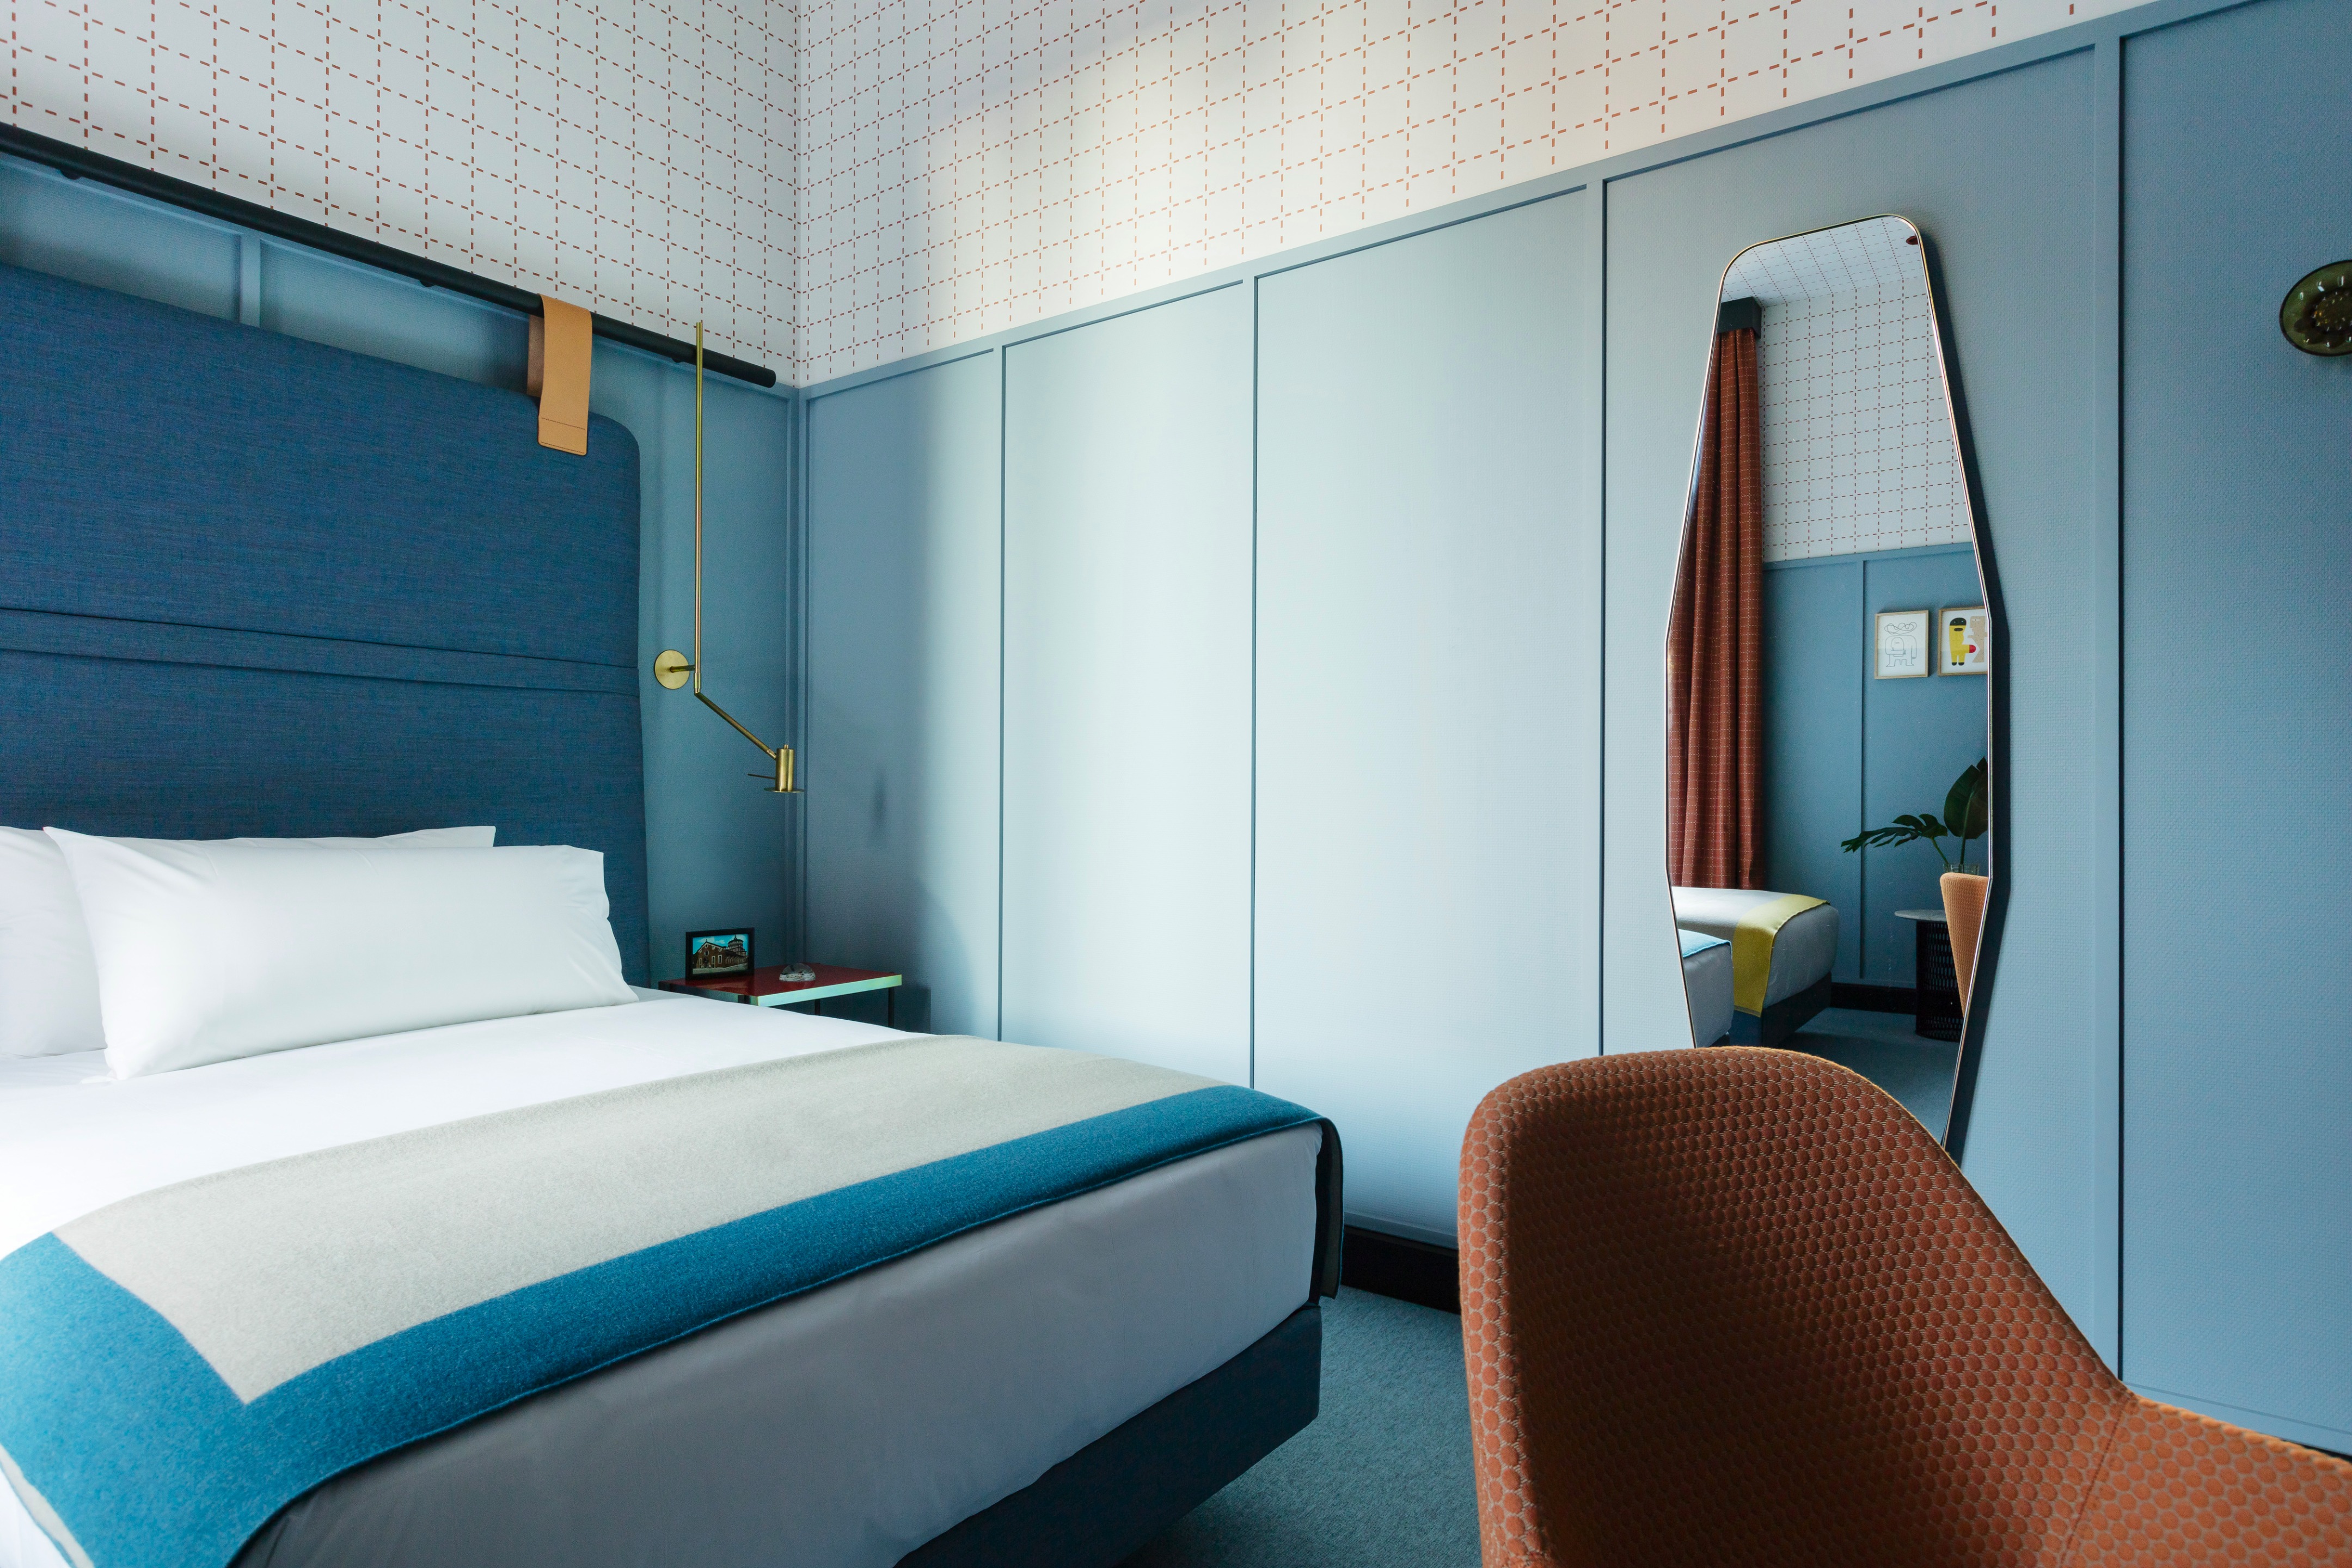 Patricia Urquiola designs the Colorful Hotel Room Mate Giulia in Milan